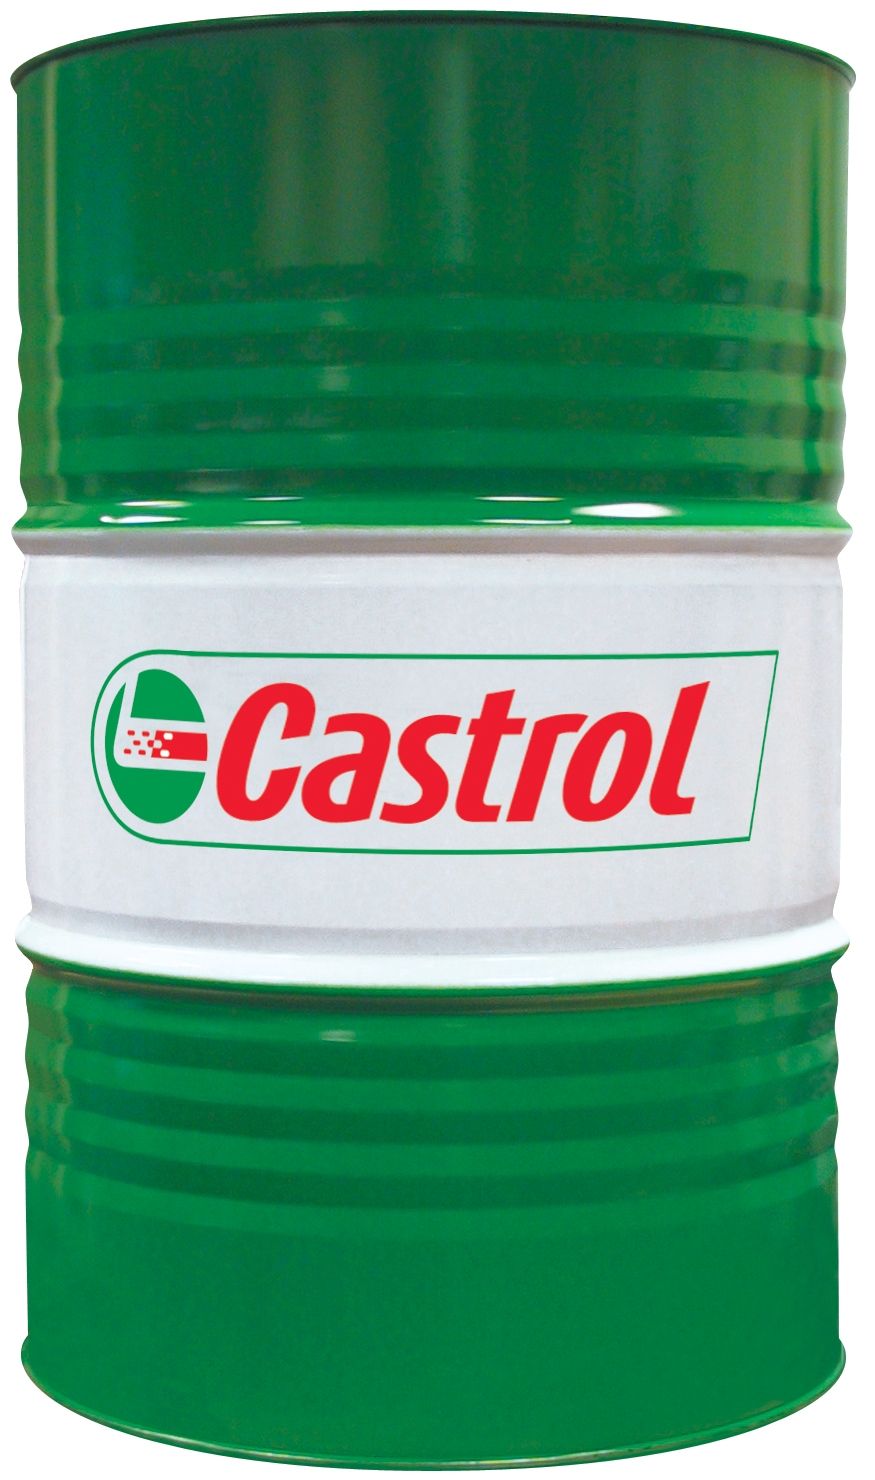 фото Castrol 15ba5c моторное масло castrol edge a3/b4 5w40 синтетическое 60 л 15ba5c